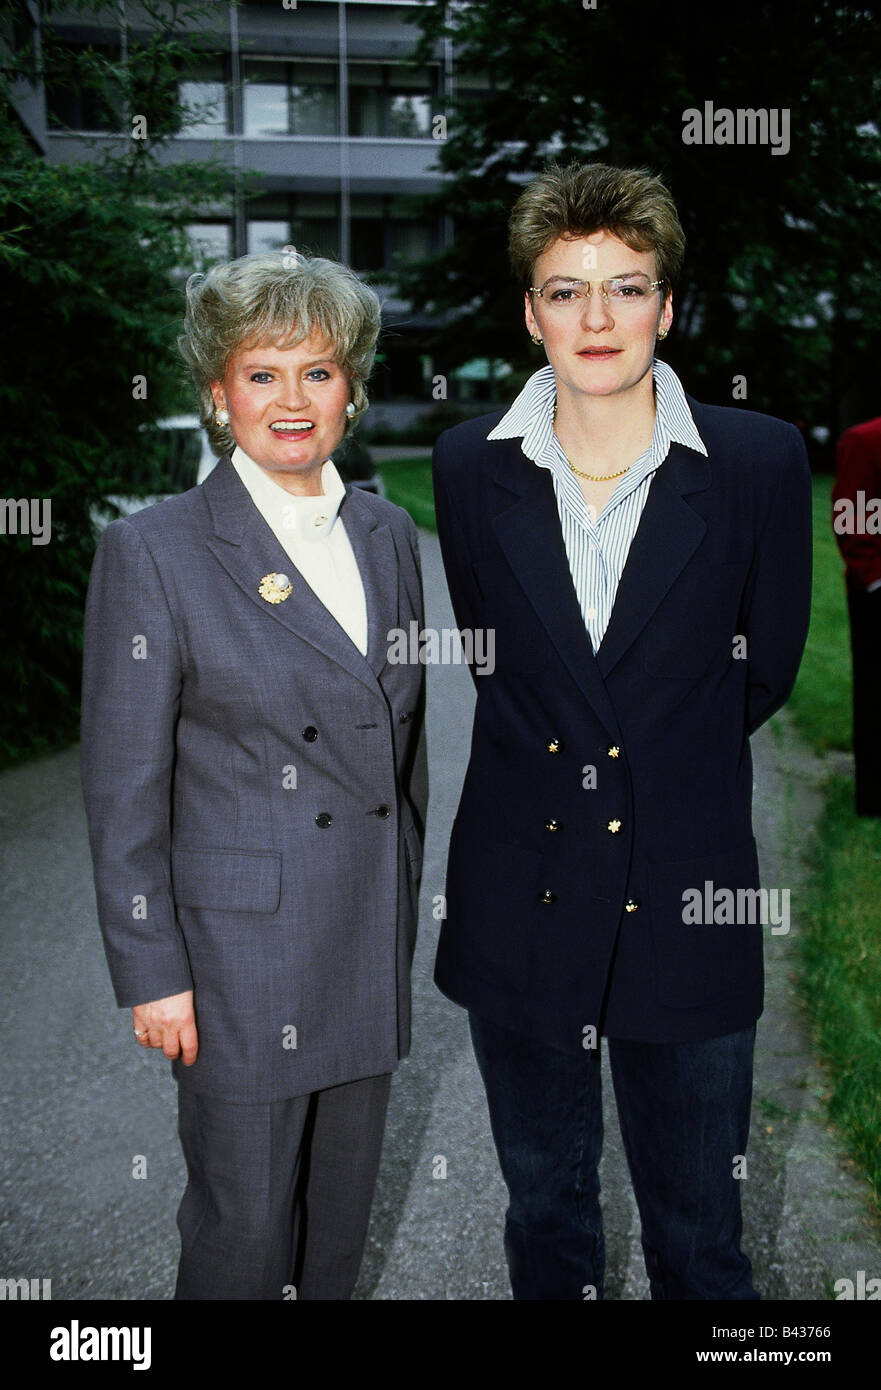 Kohl, Helmut, * 3.4.1930, German politician (CDU), his wife Hannelore, half length, with Monika Hohlmeier, foundation 'Pfennigparade', Munich, 1994, Stock Photo